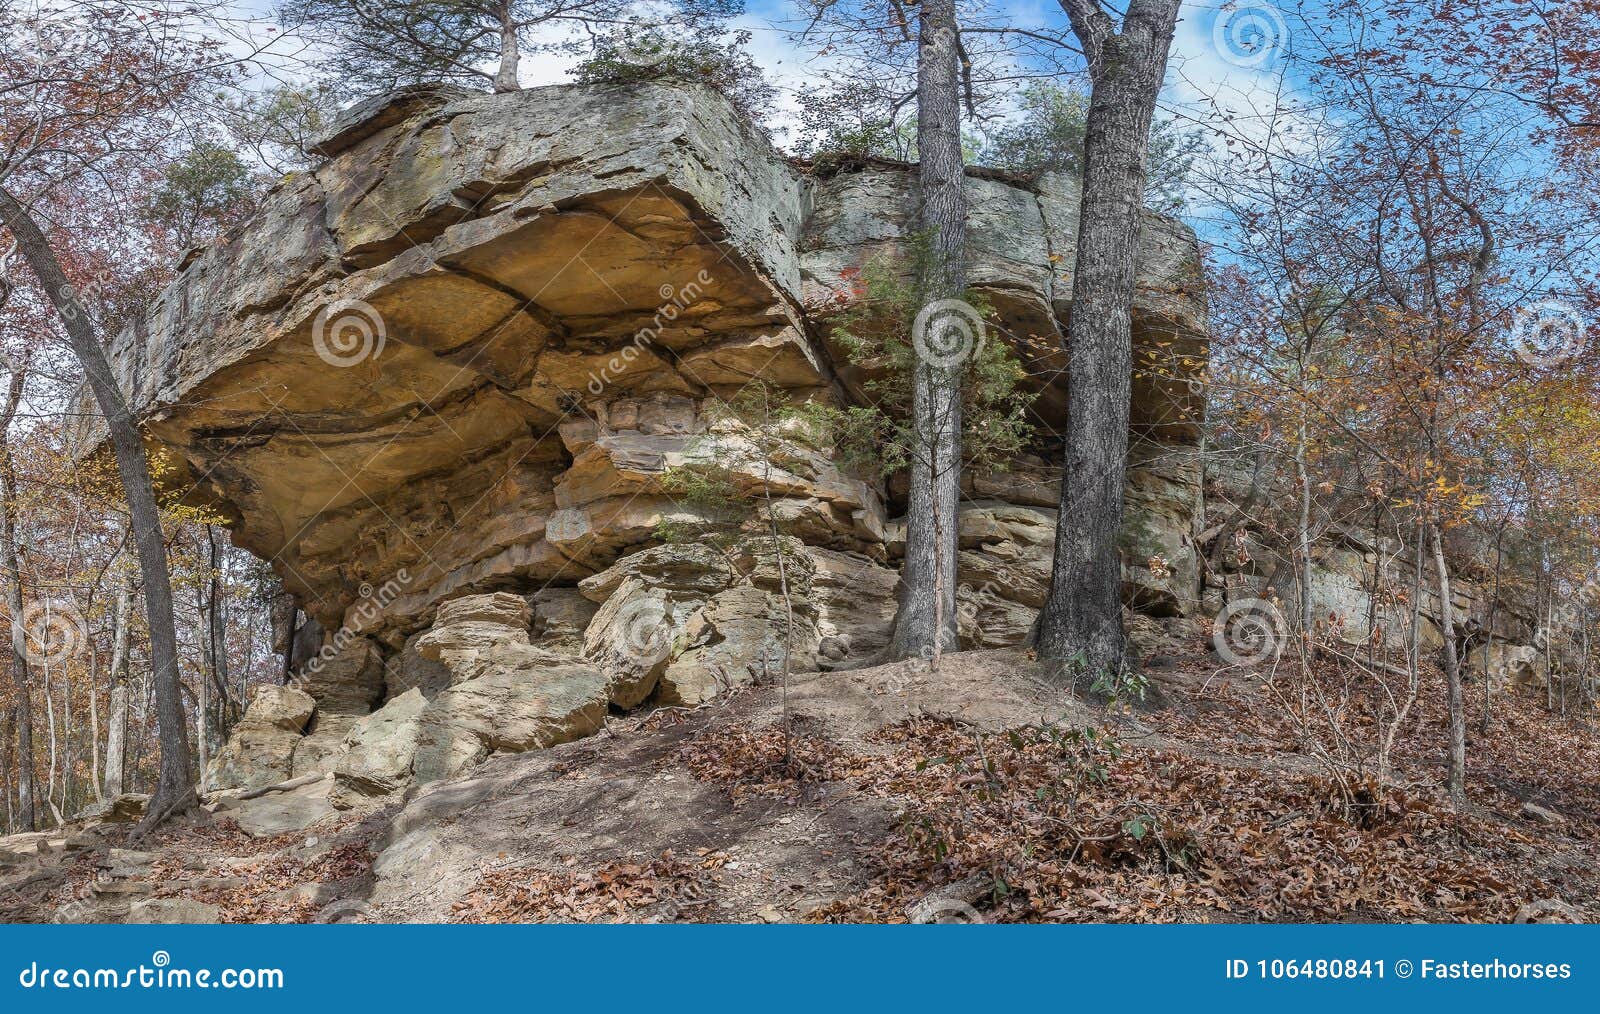 appalachian rock outcroppings on a hiking trail.